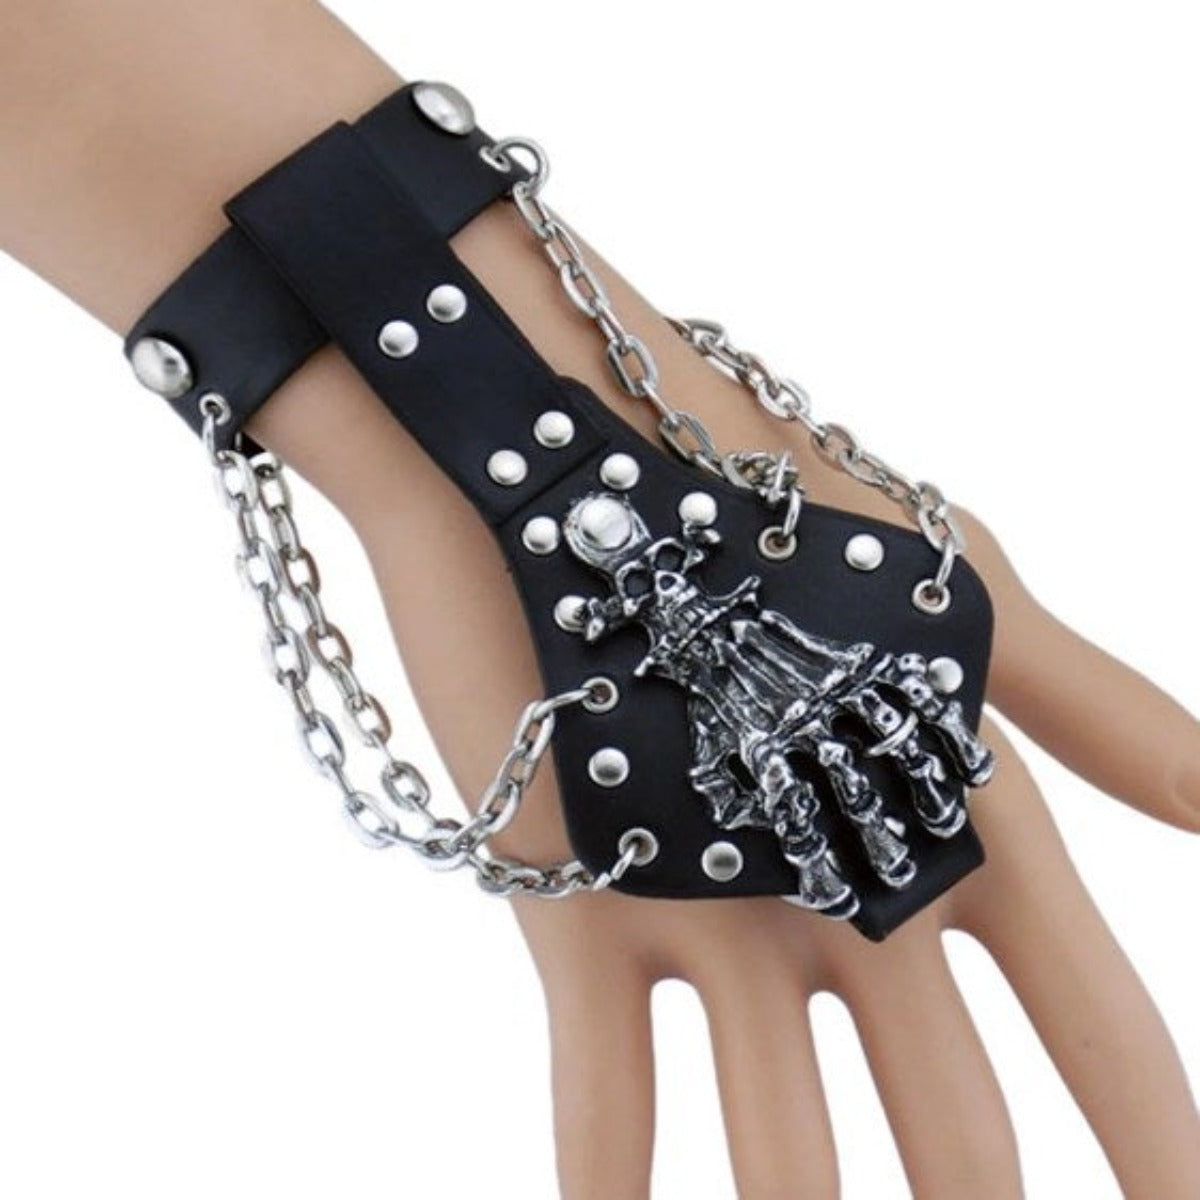 Spike Skeleton Leather Cuff Bracelet